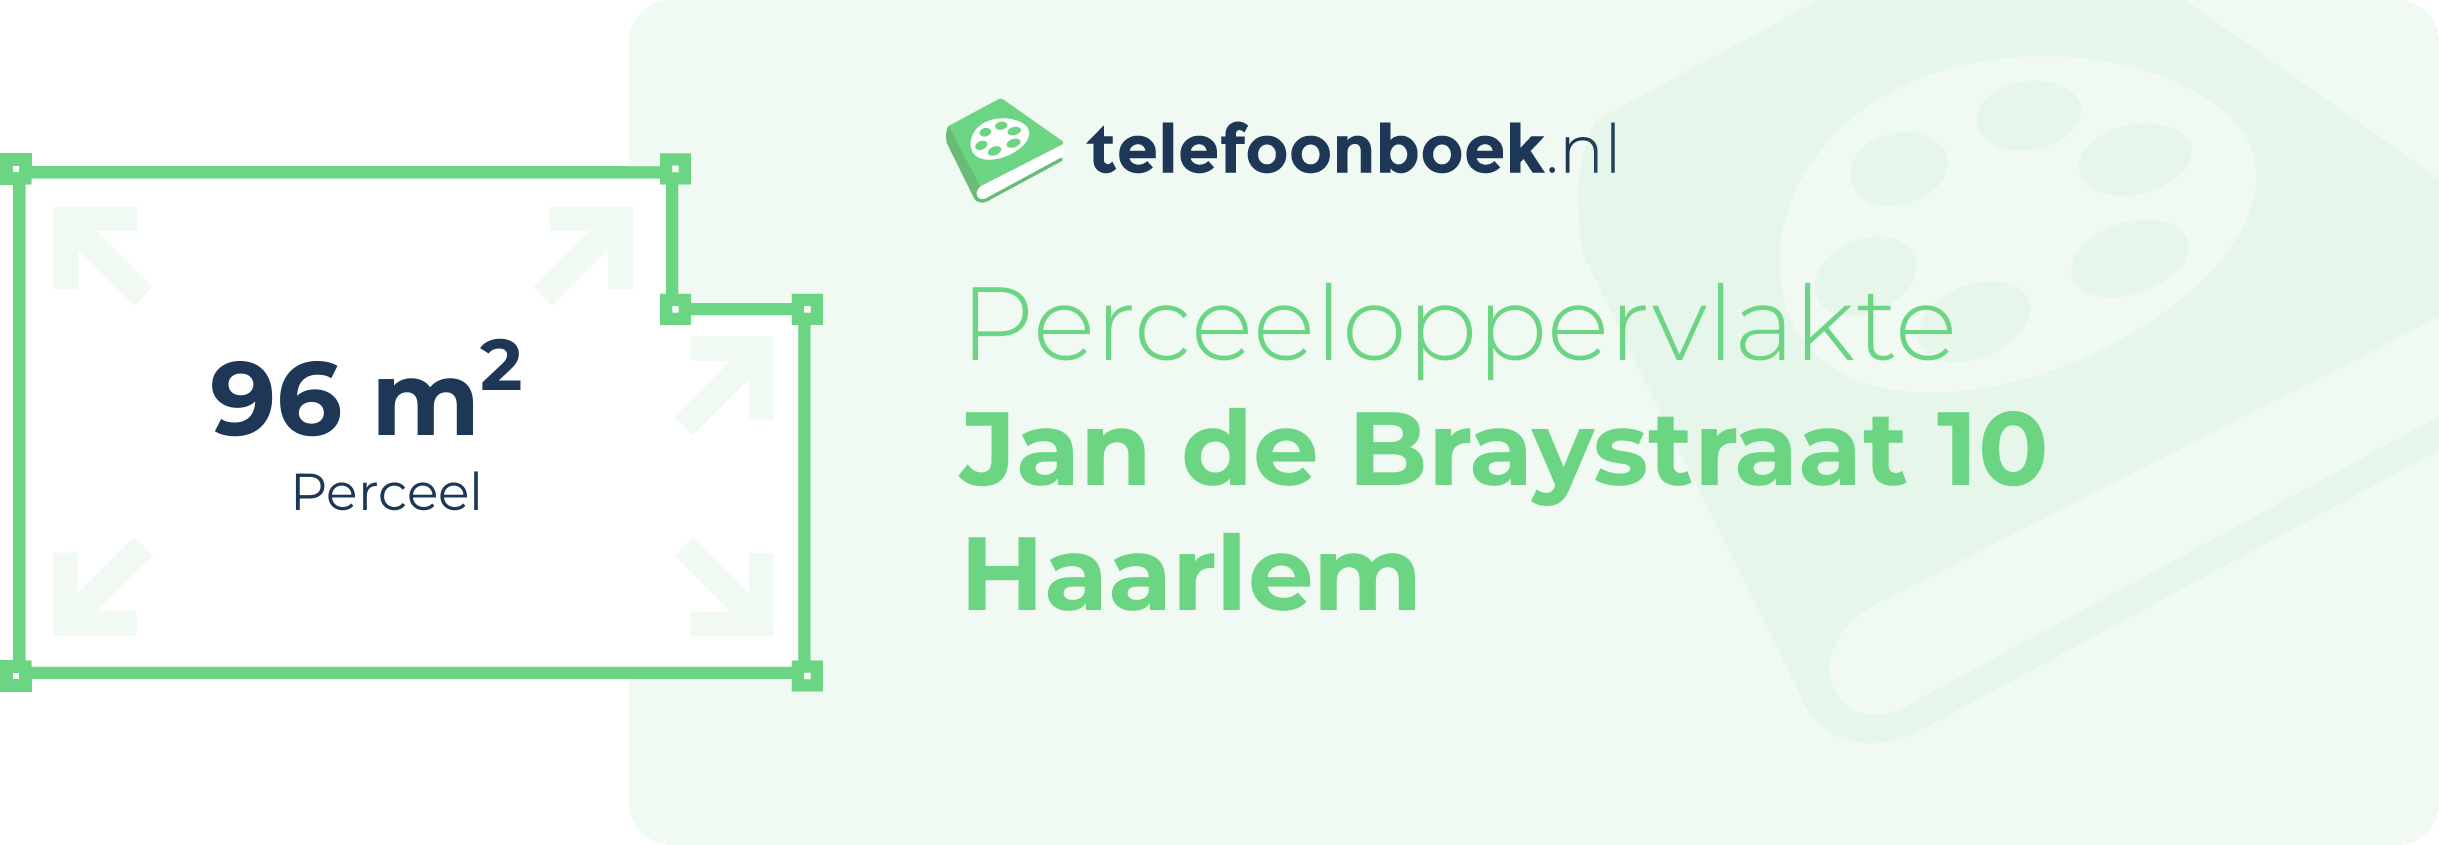 Perceeloppervlakte Jan De Braystraat 10 Haarlem